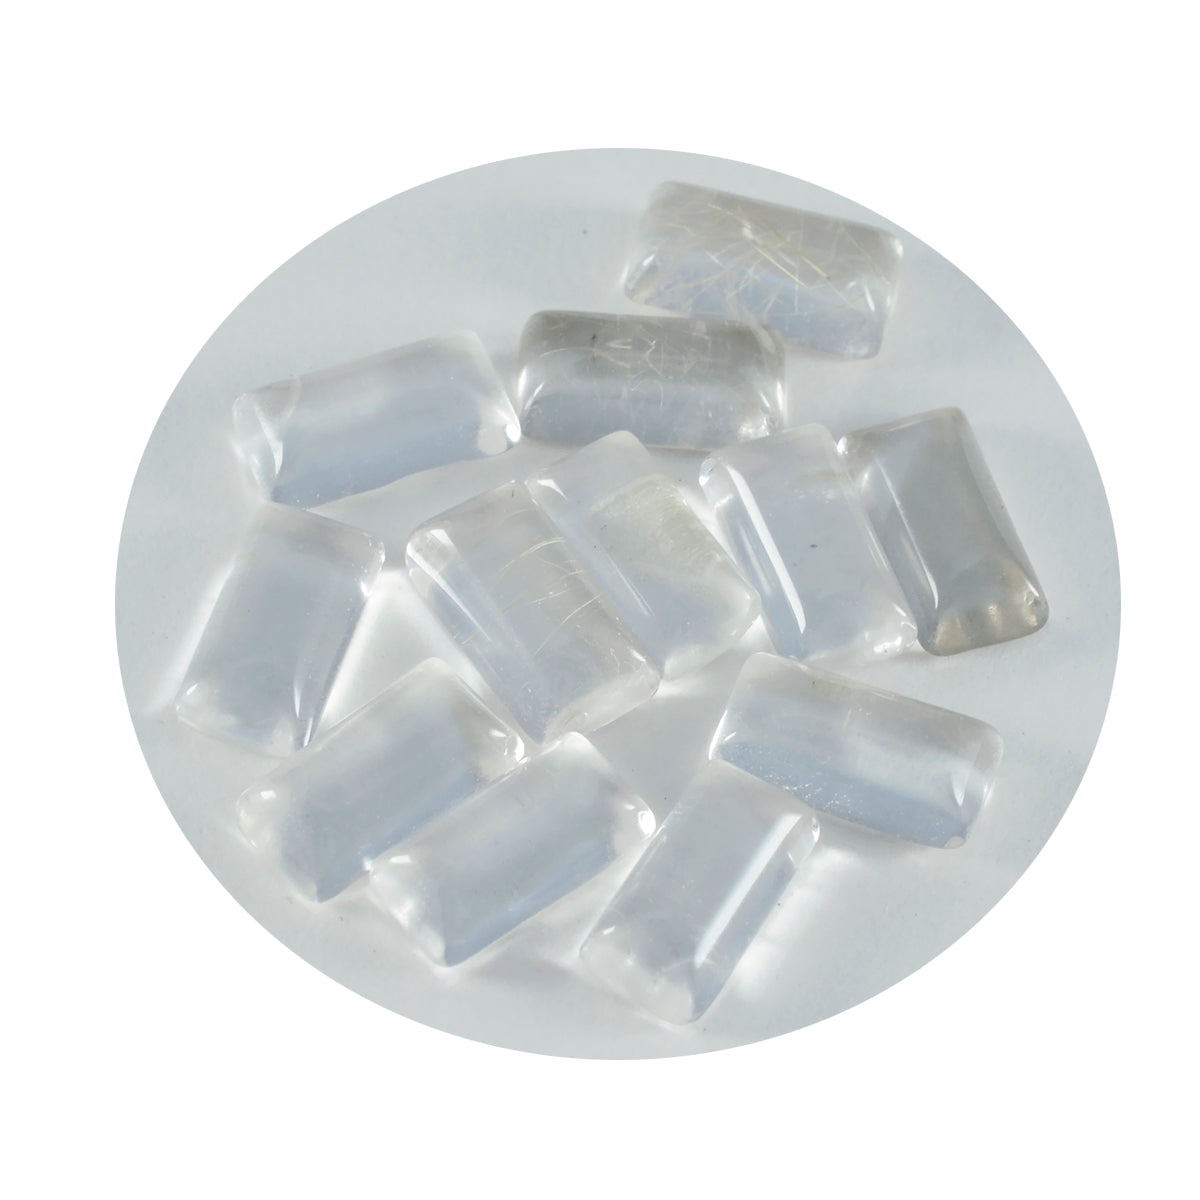 Riyogems 1PC White Crystal Quartz Cabochon 8x16 mm Baguett Shape Nice Quality Gems